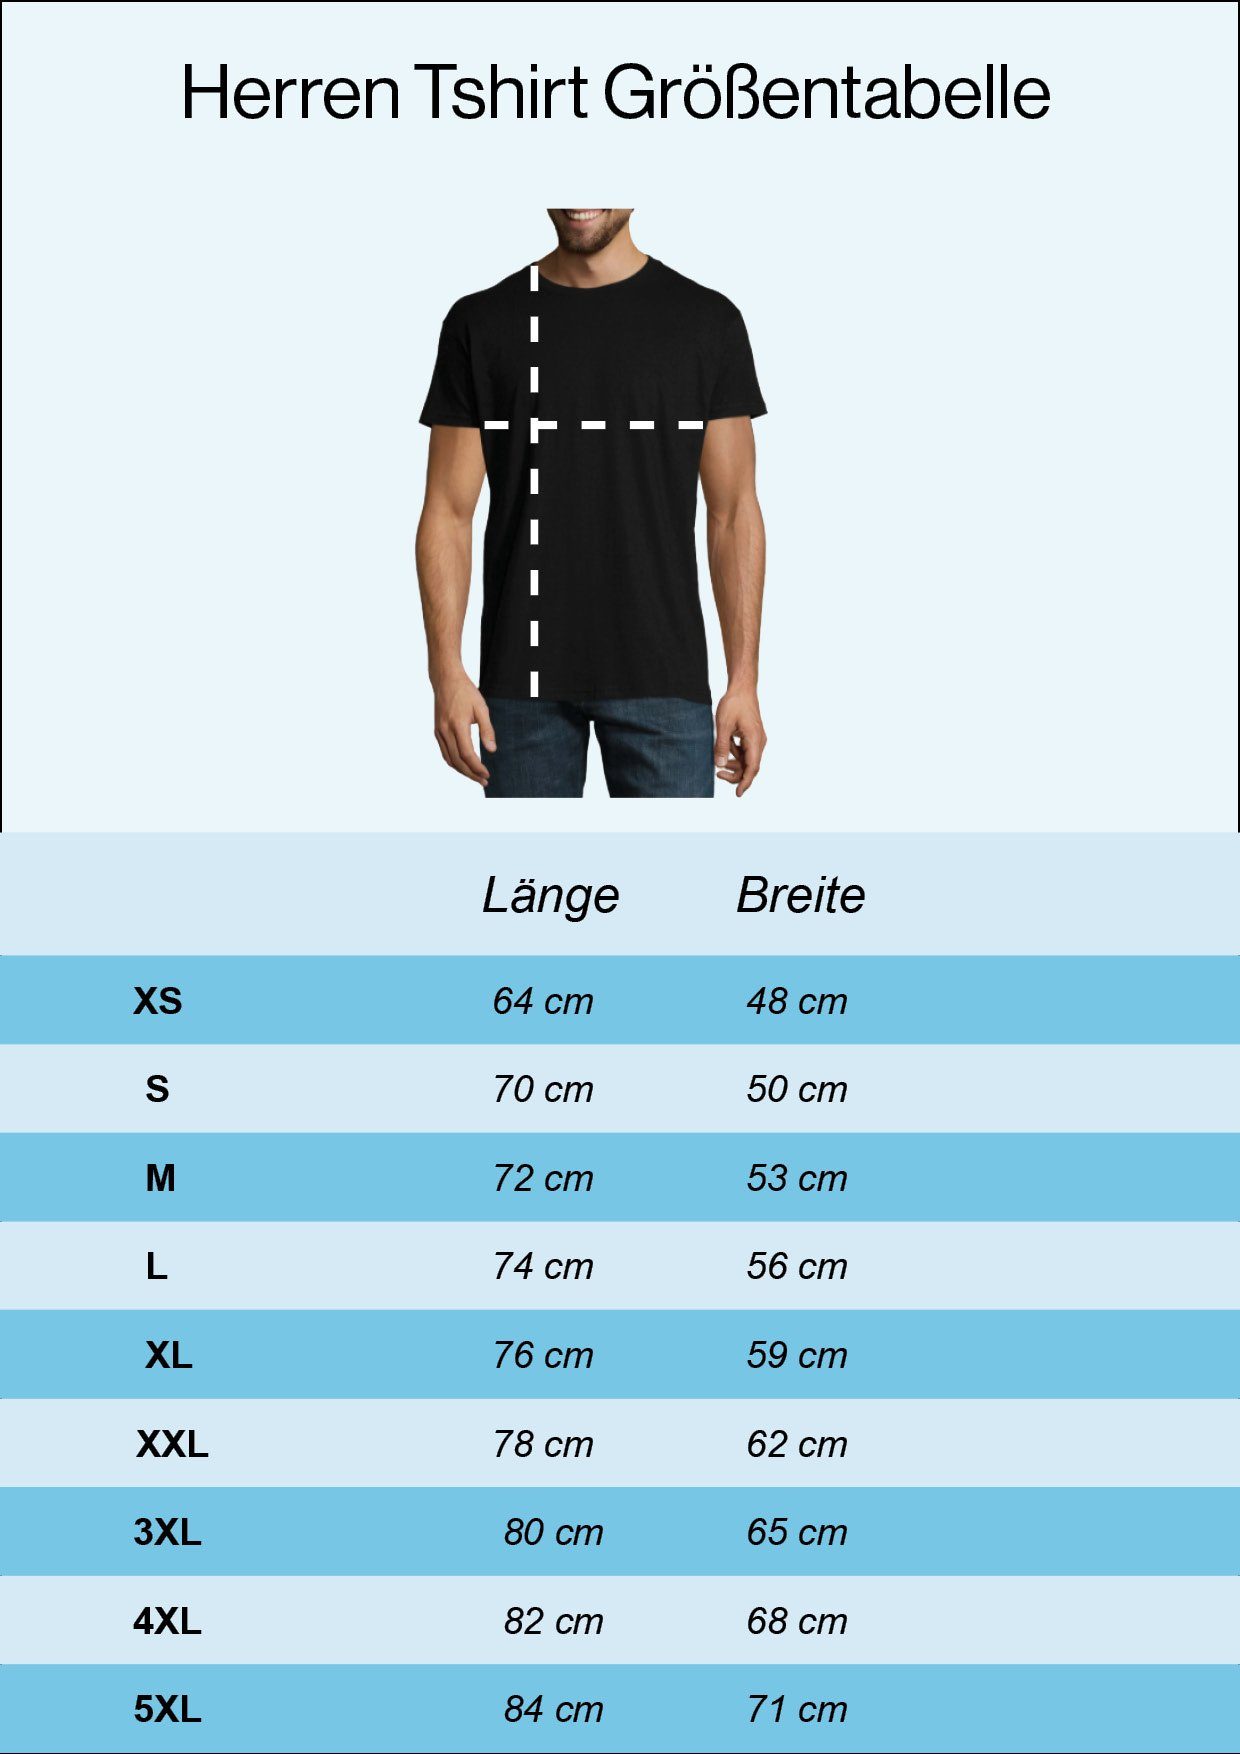 trendigem Shirt Heartbeat T-Shirt Schwarz mit Herren Designz Frontprint Youth Mountain